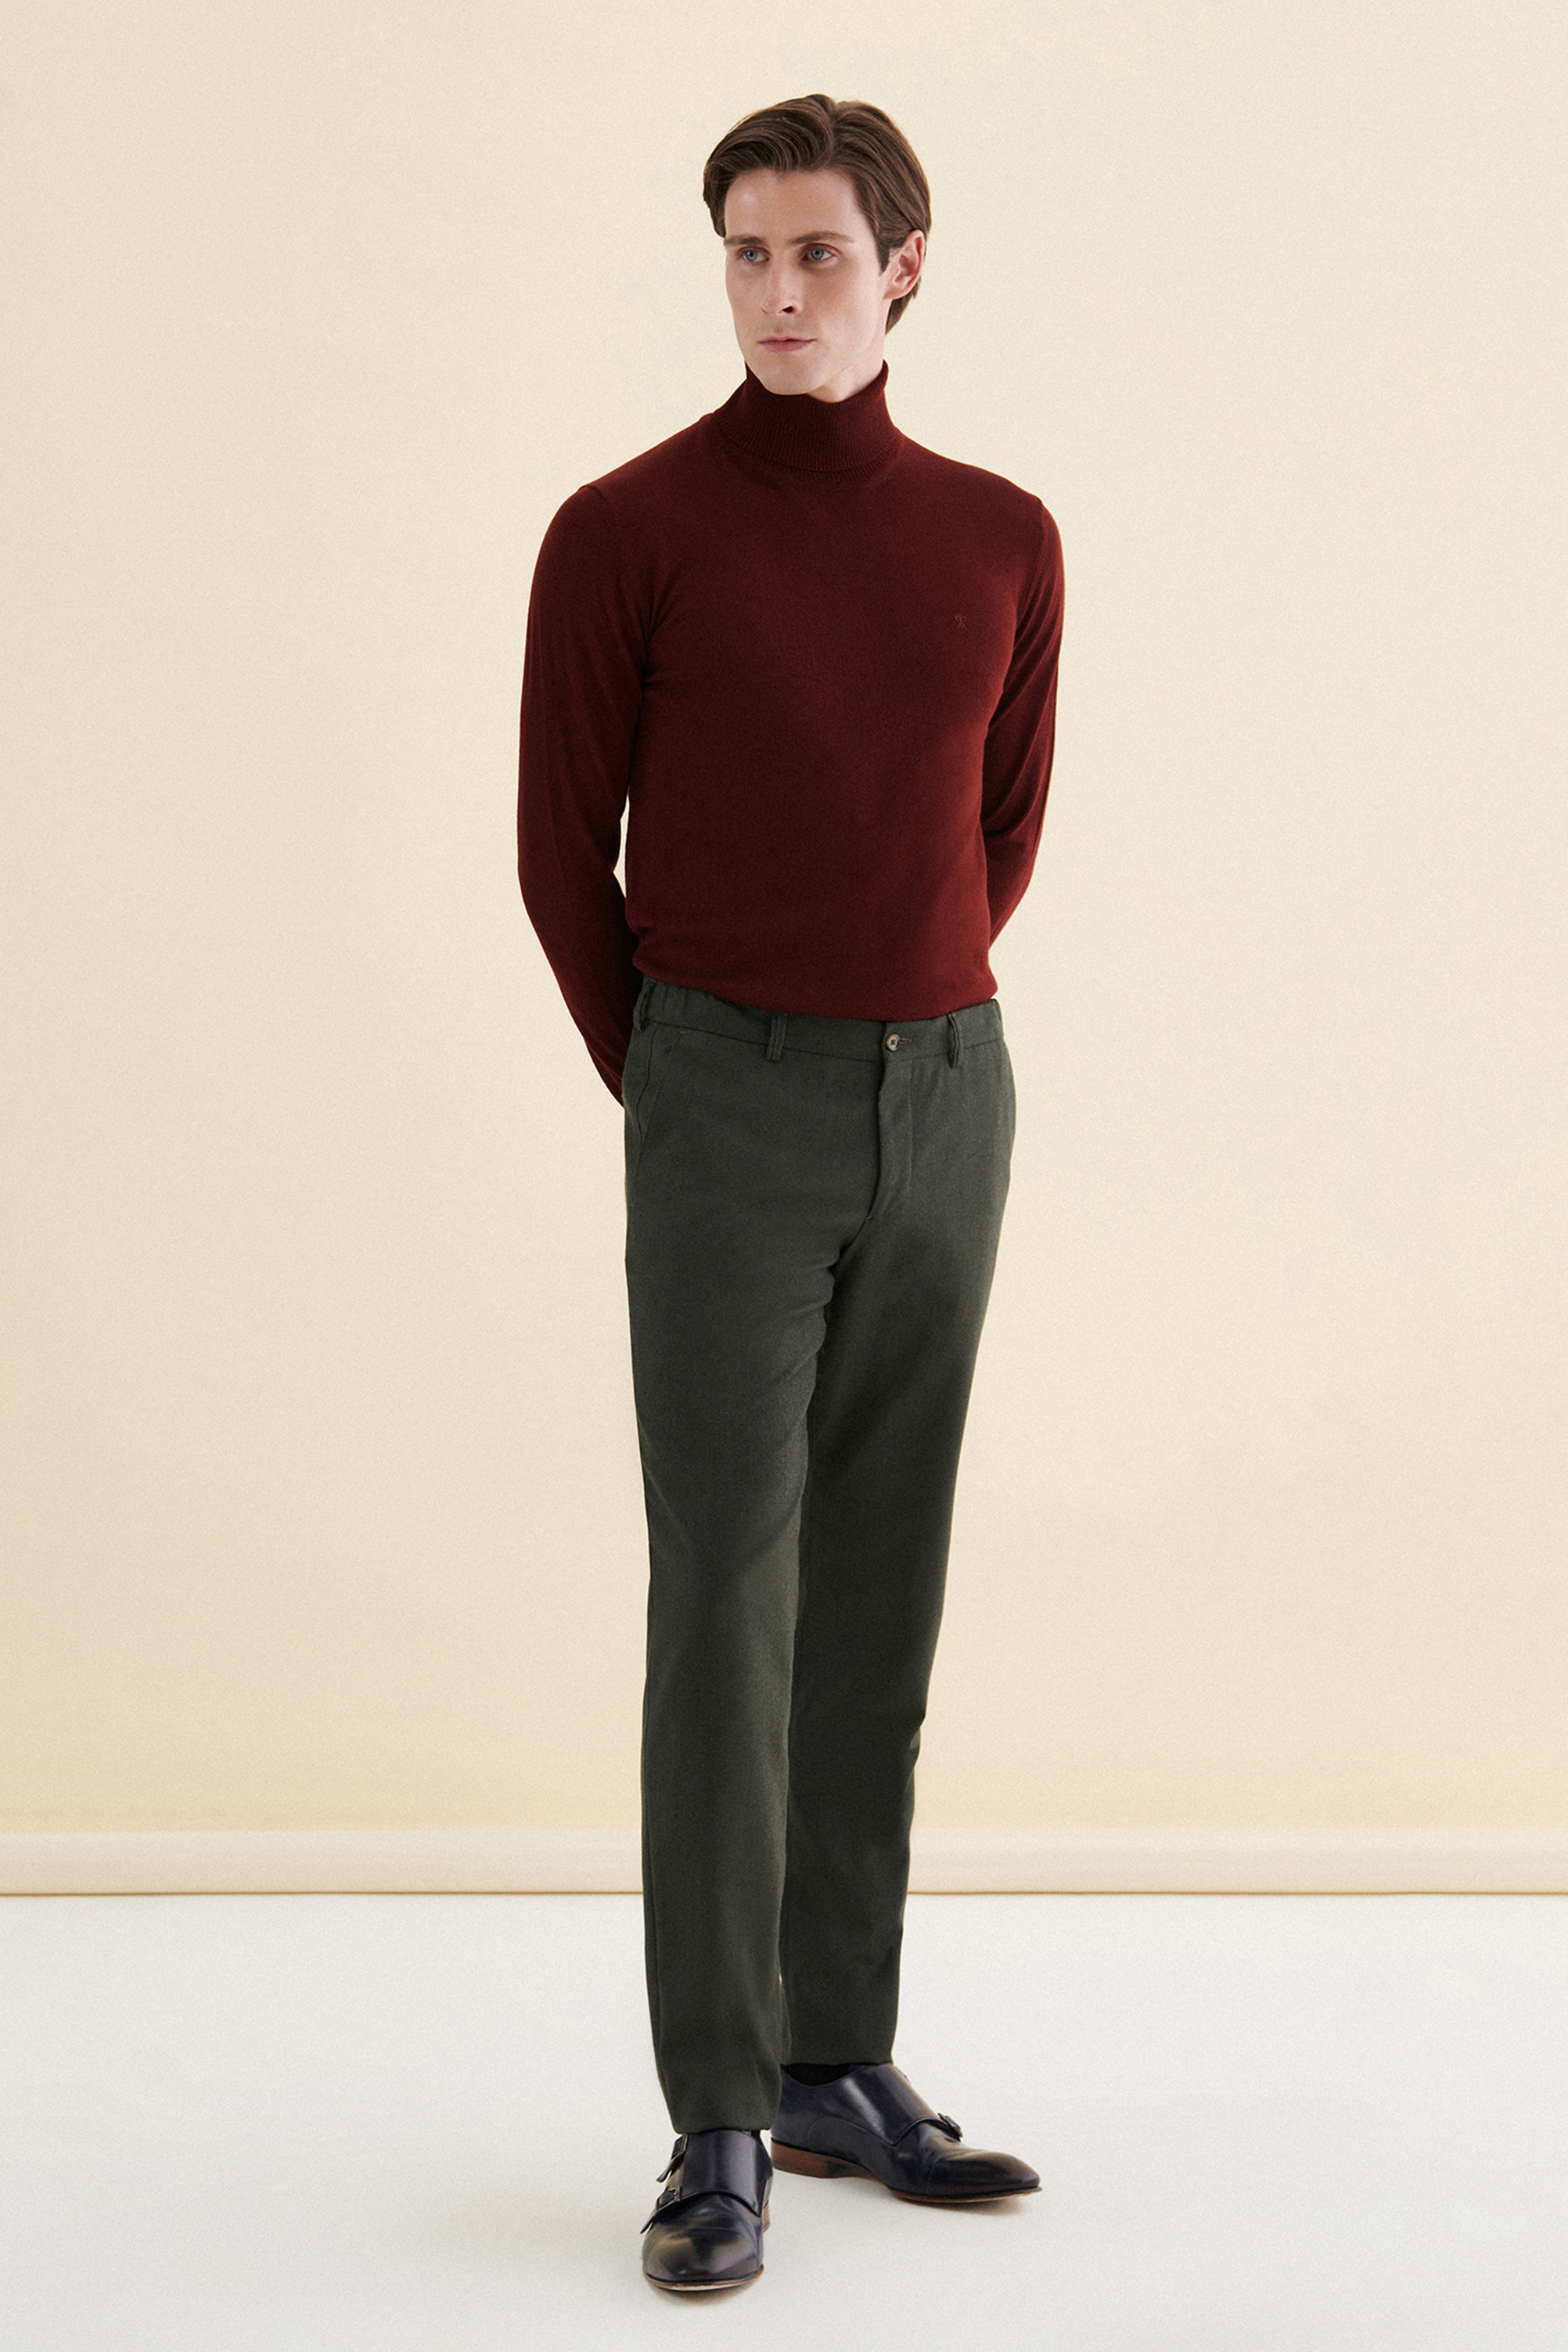 Damat Tween Damat Slim Fit Haki Düz %100 Yün Chino Pantolon. 2